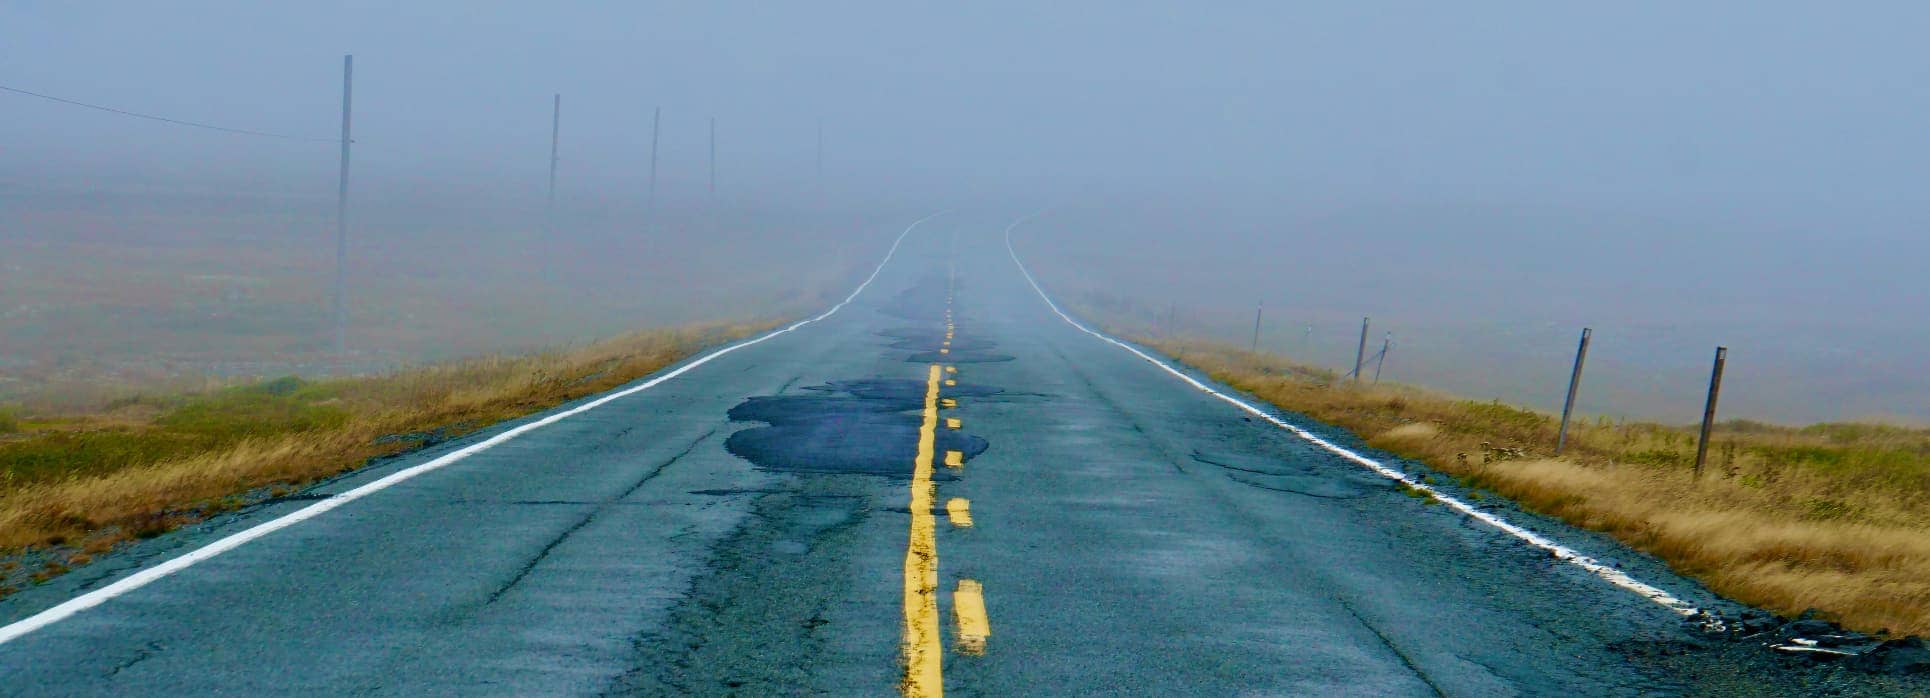 Fog covered highway